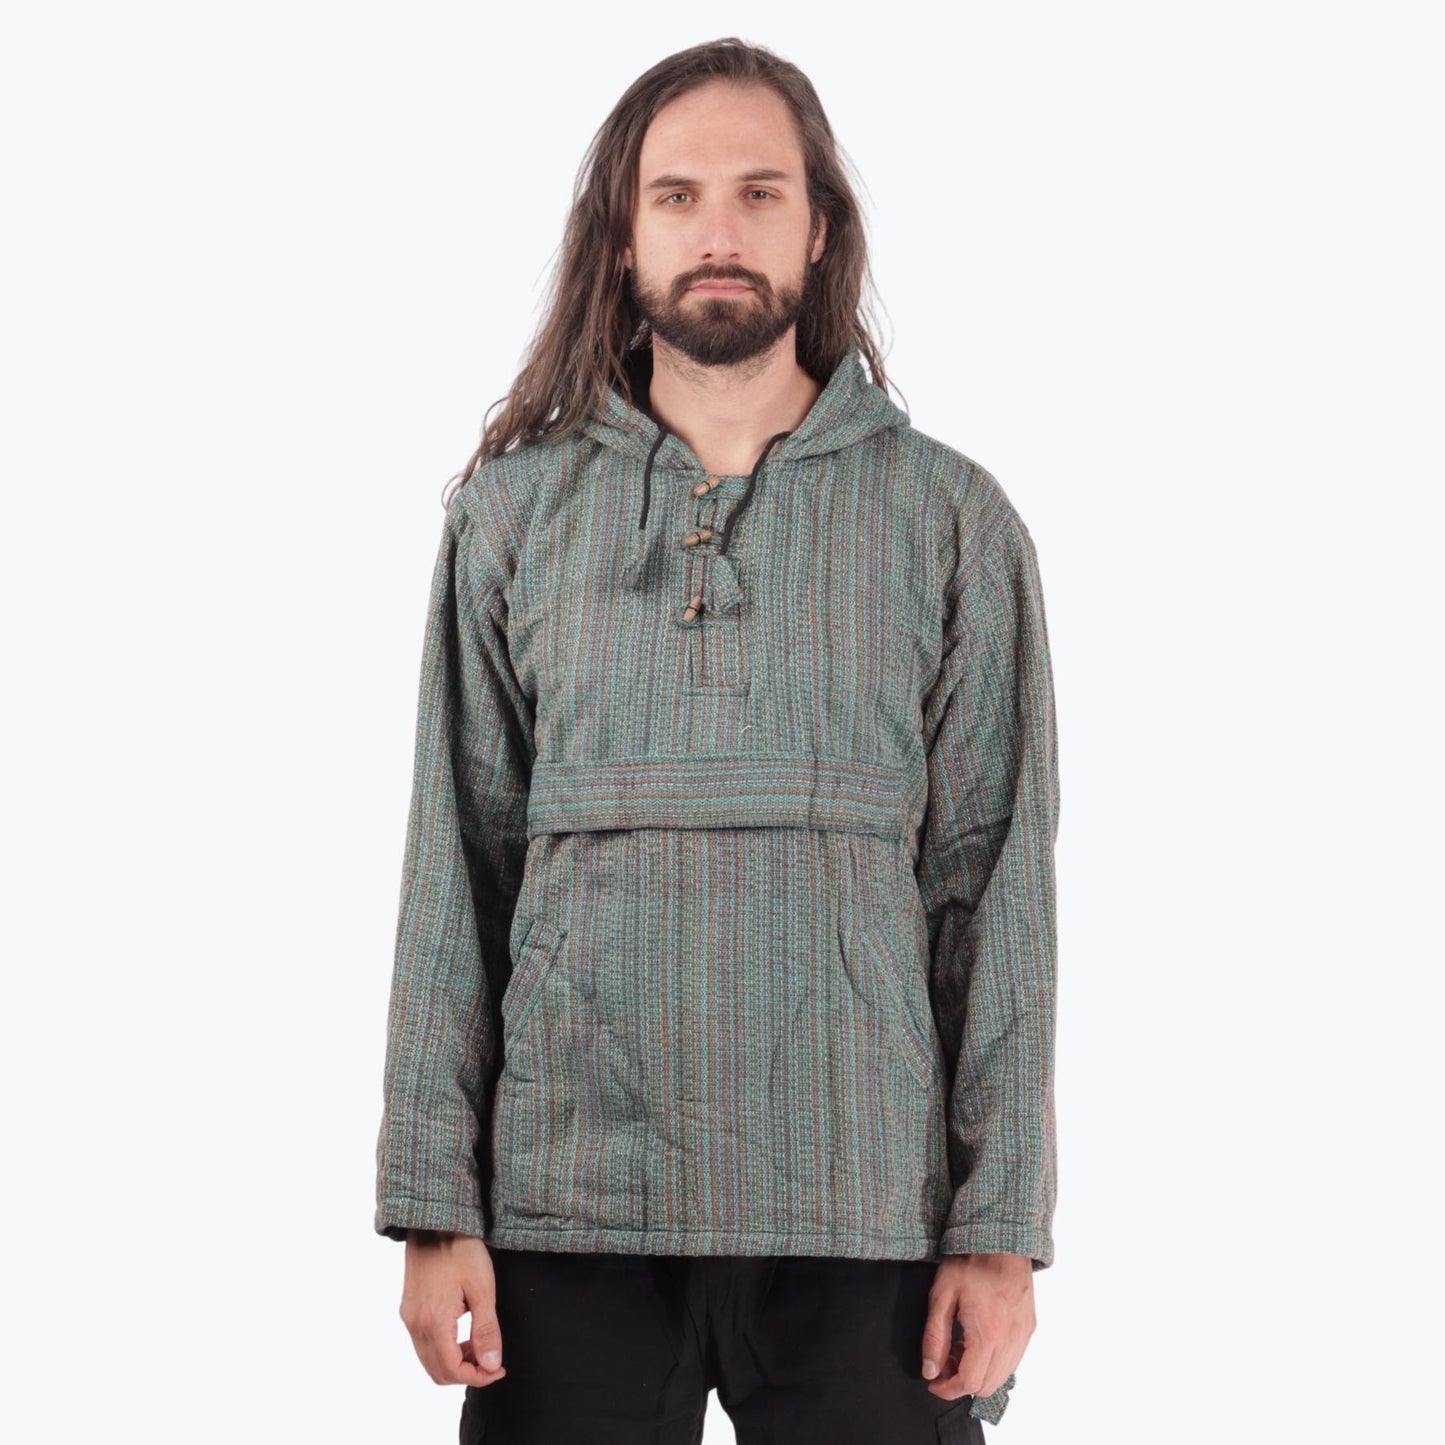 Sweatshirt with pocket - Green